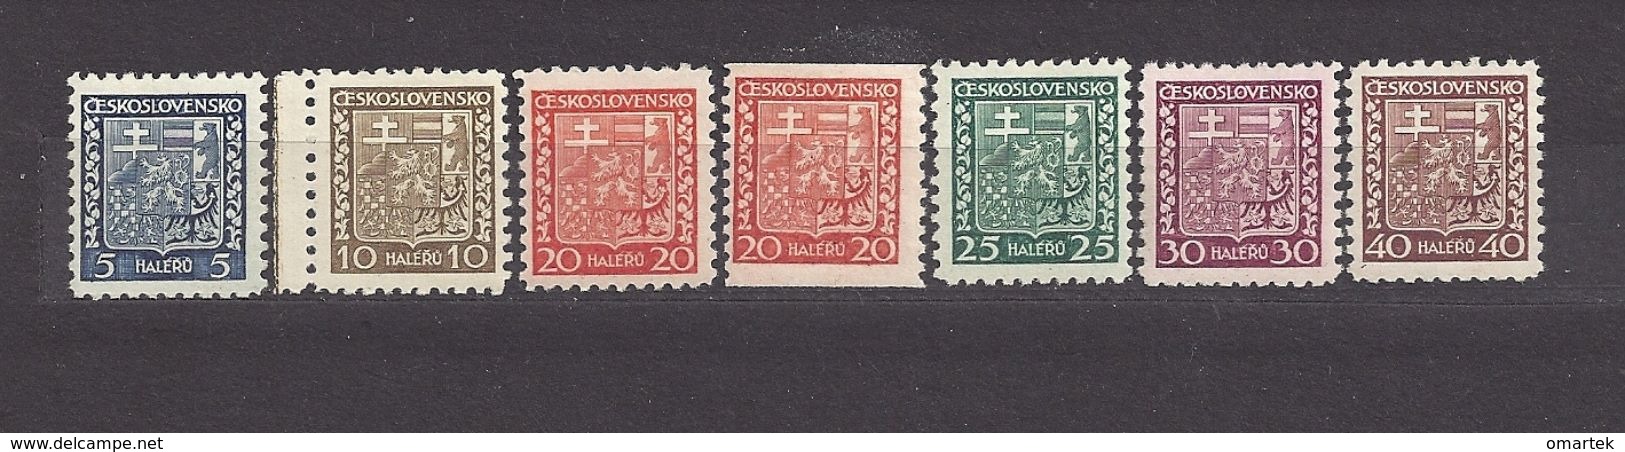 Czechoslovakia Tschechoslowakei 1929 MNH ** Mi 277-282 Sc 152-157 State Shield. C2 - Ungebraucht